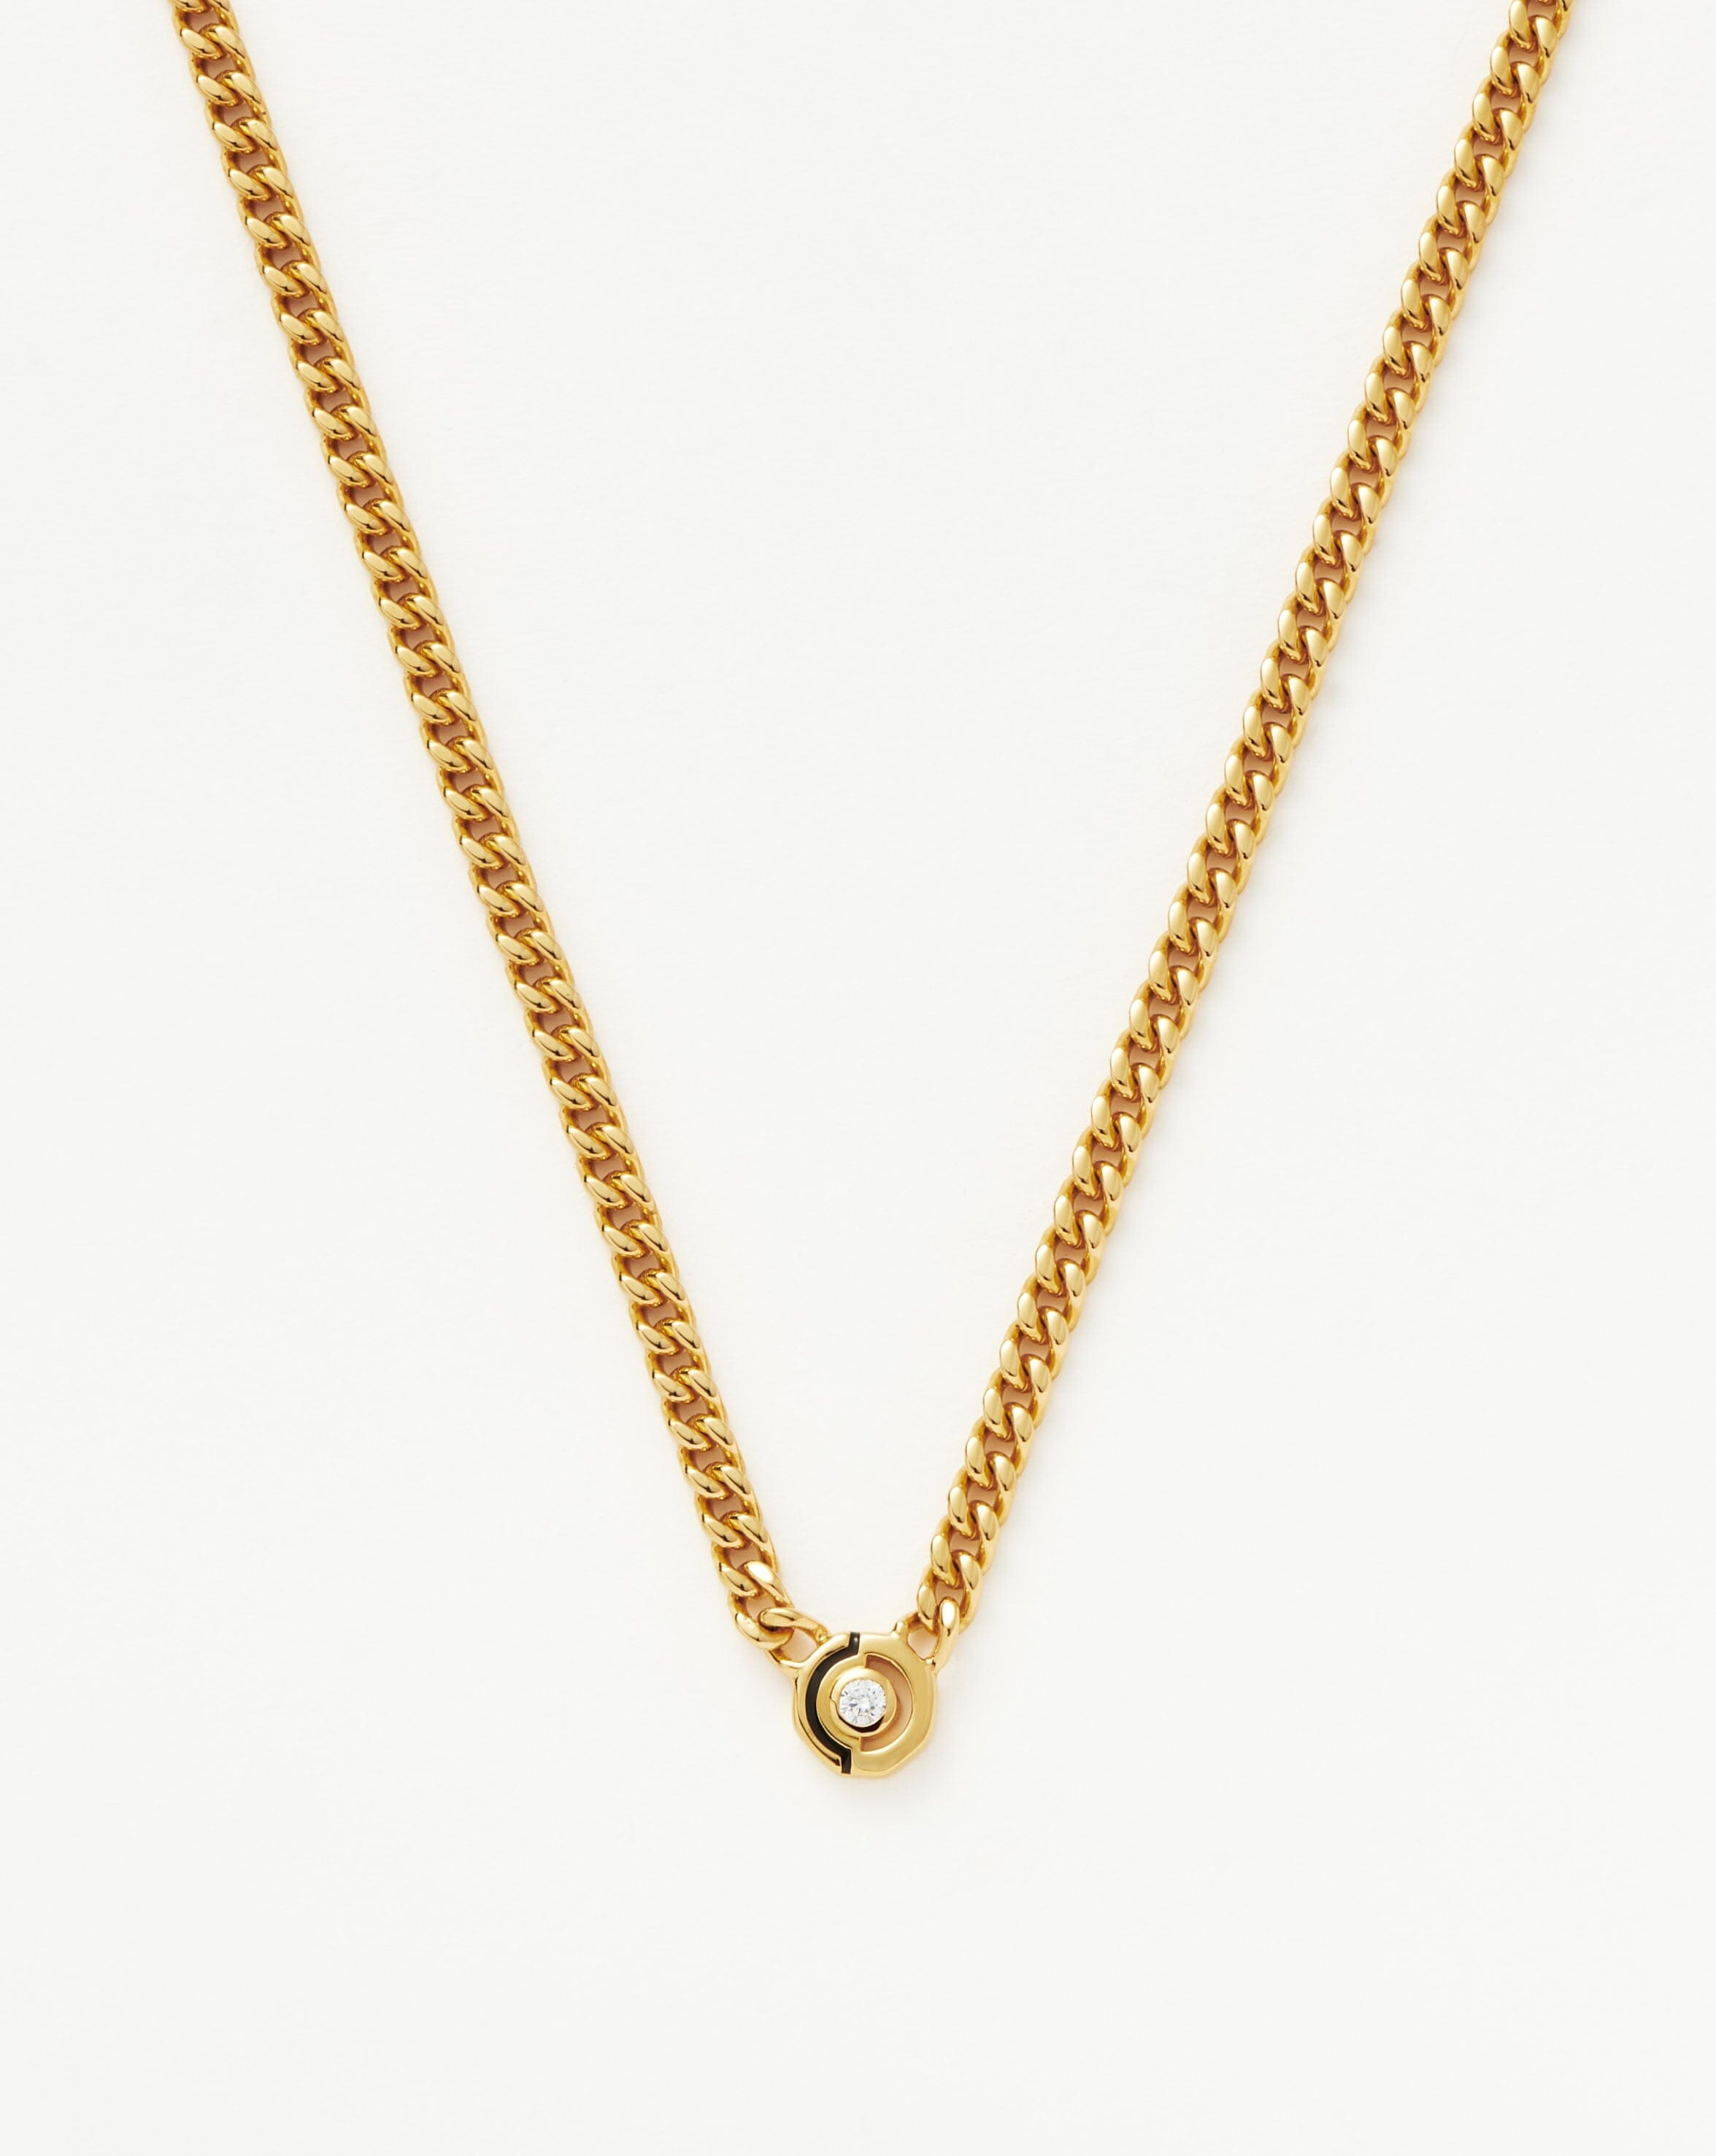 Louis Vuitton Dentelle Necklace in 18K White Gold 1.1 CTW, myGemma, SG